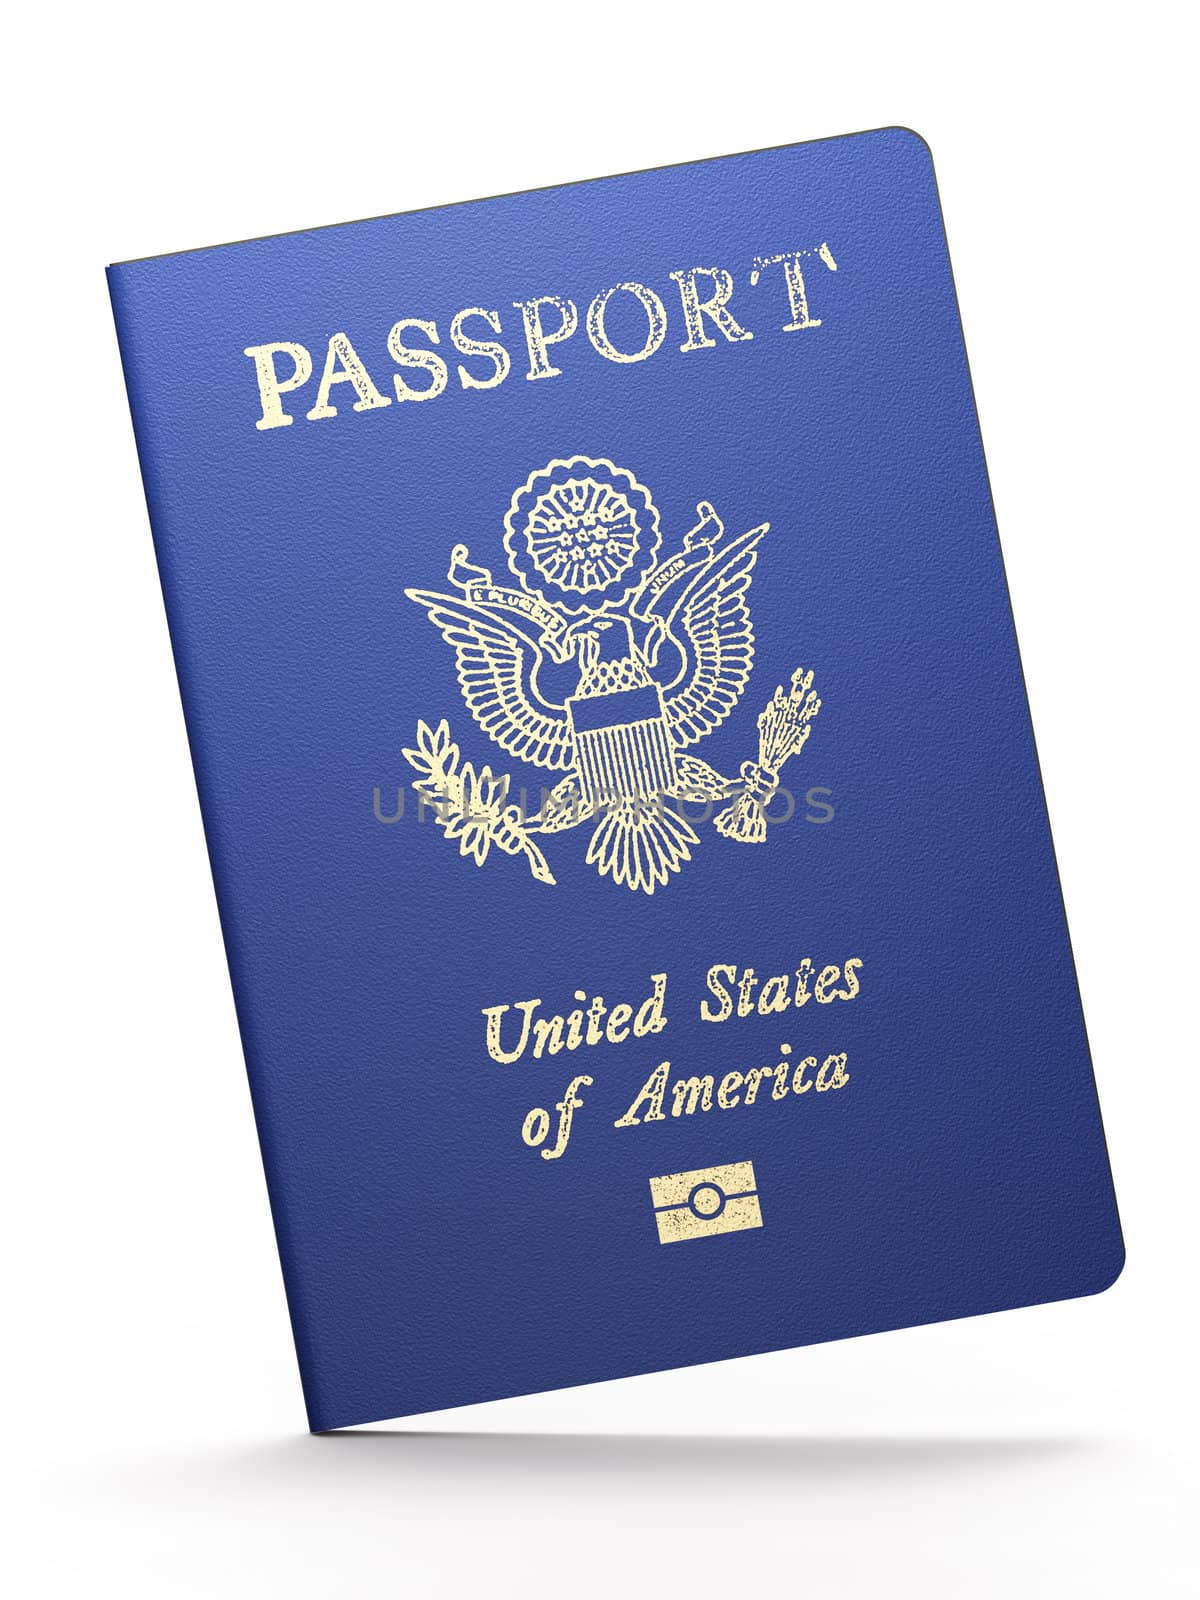 American passport on white background